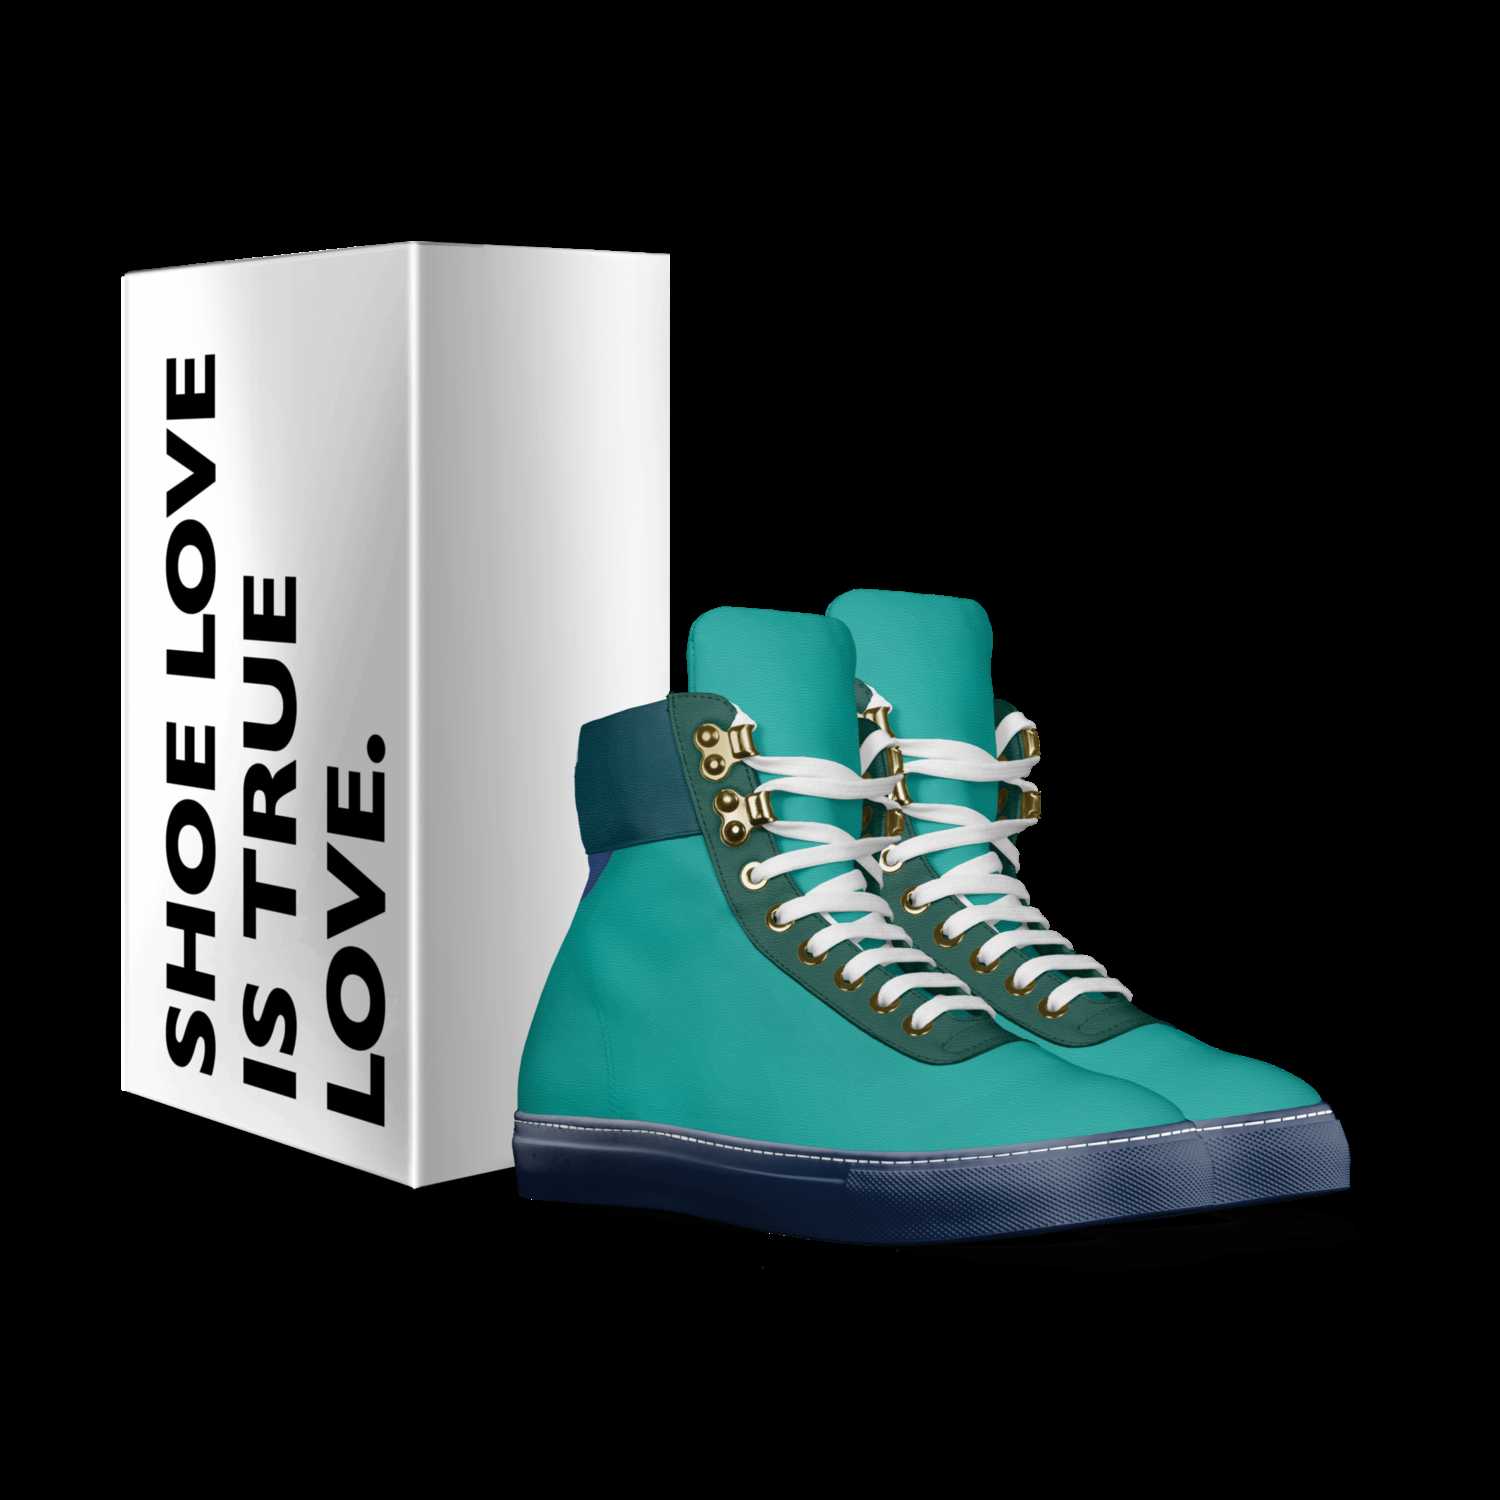 A Custom Shoe concept by Justin Maunu